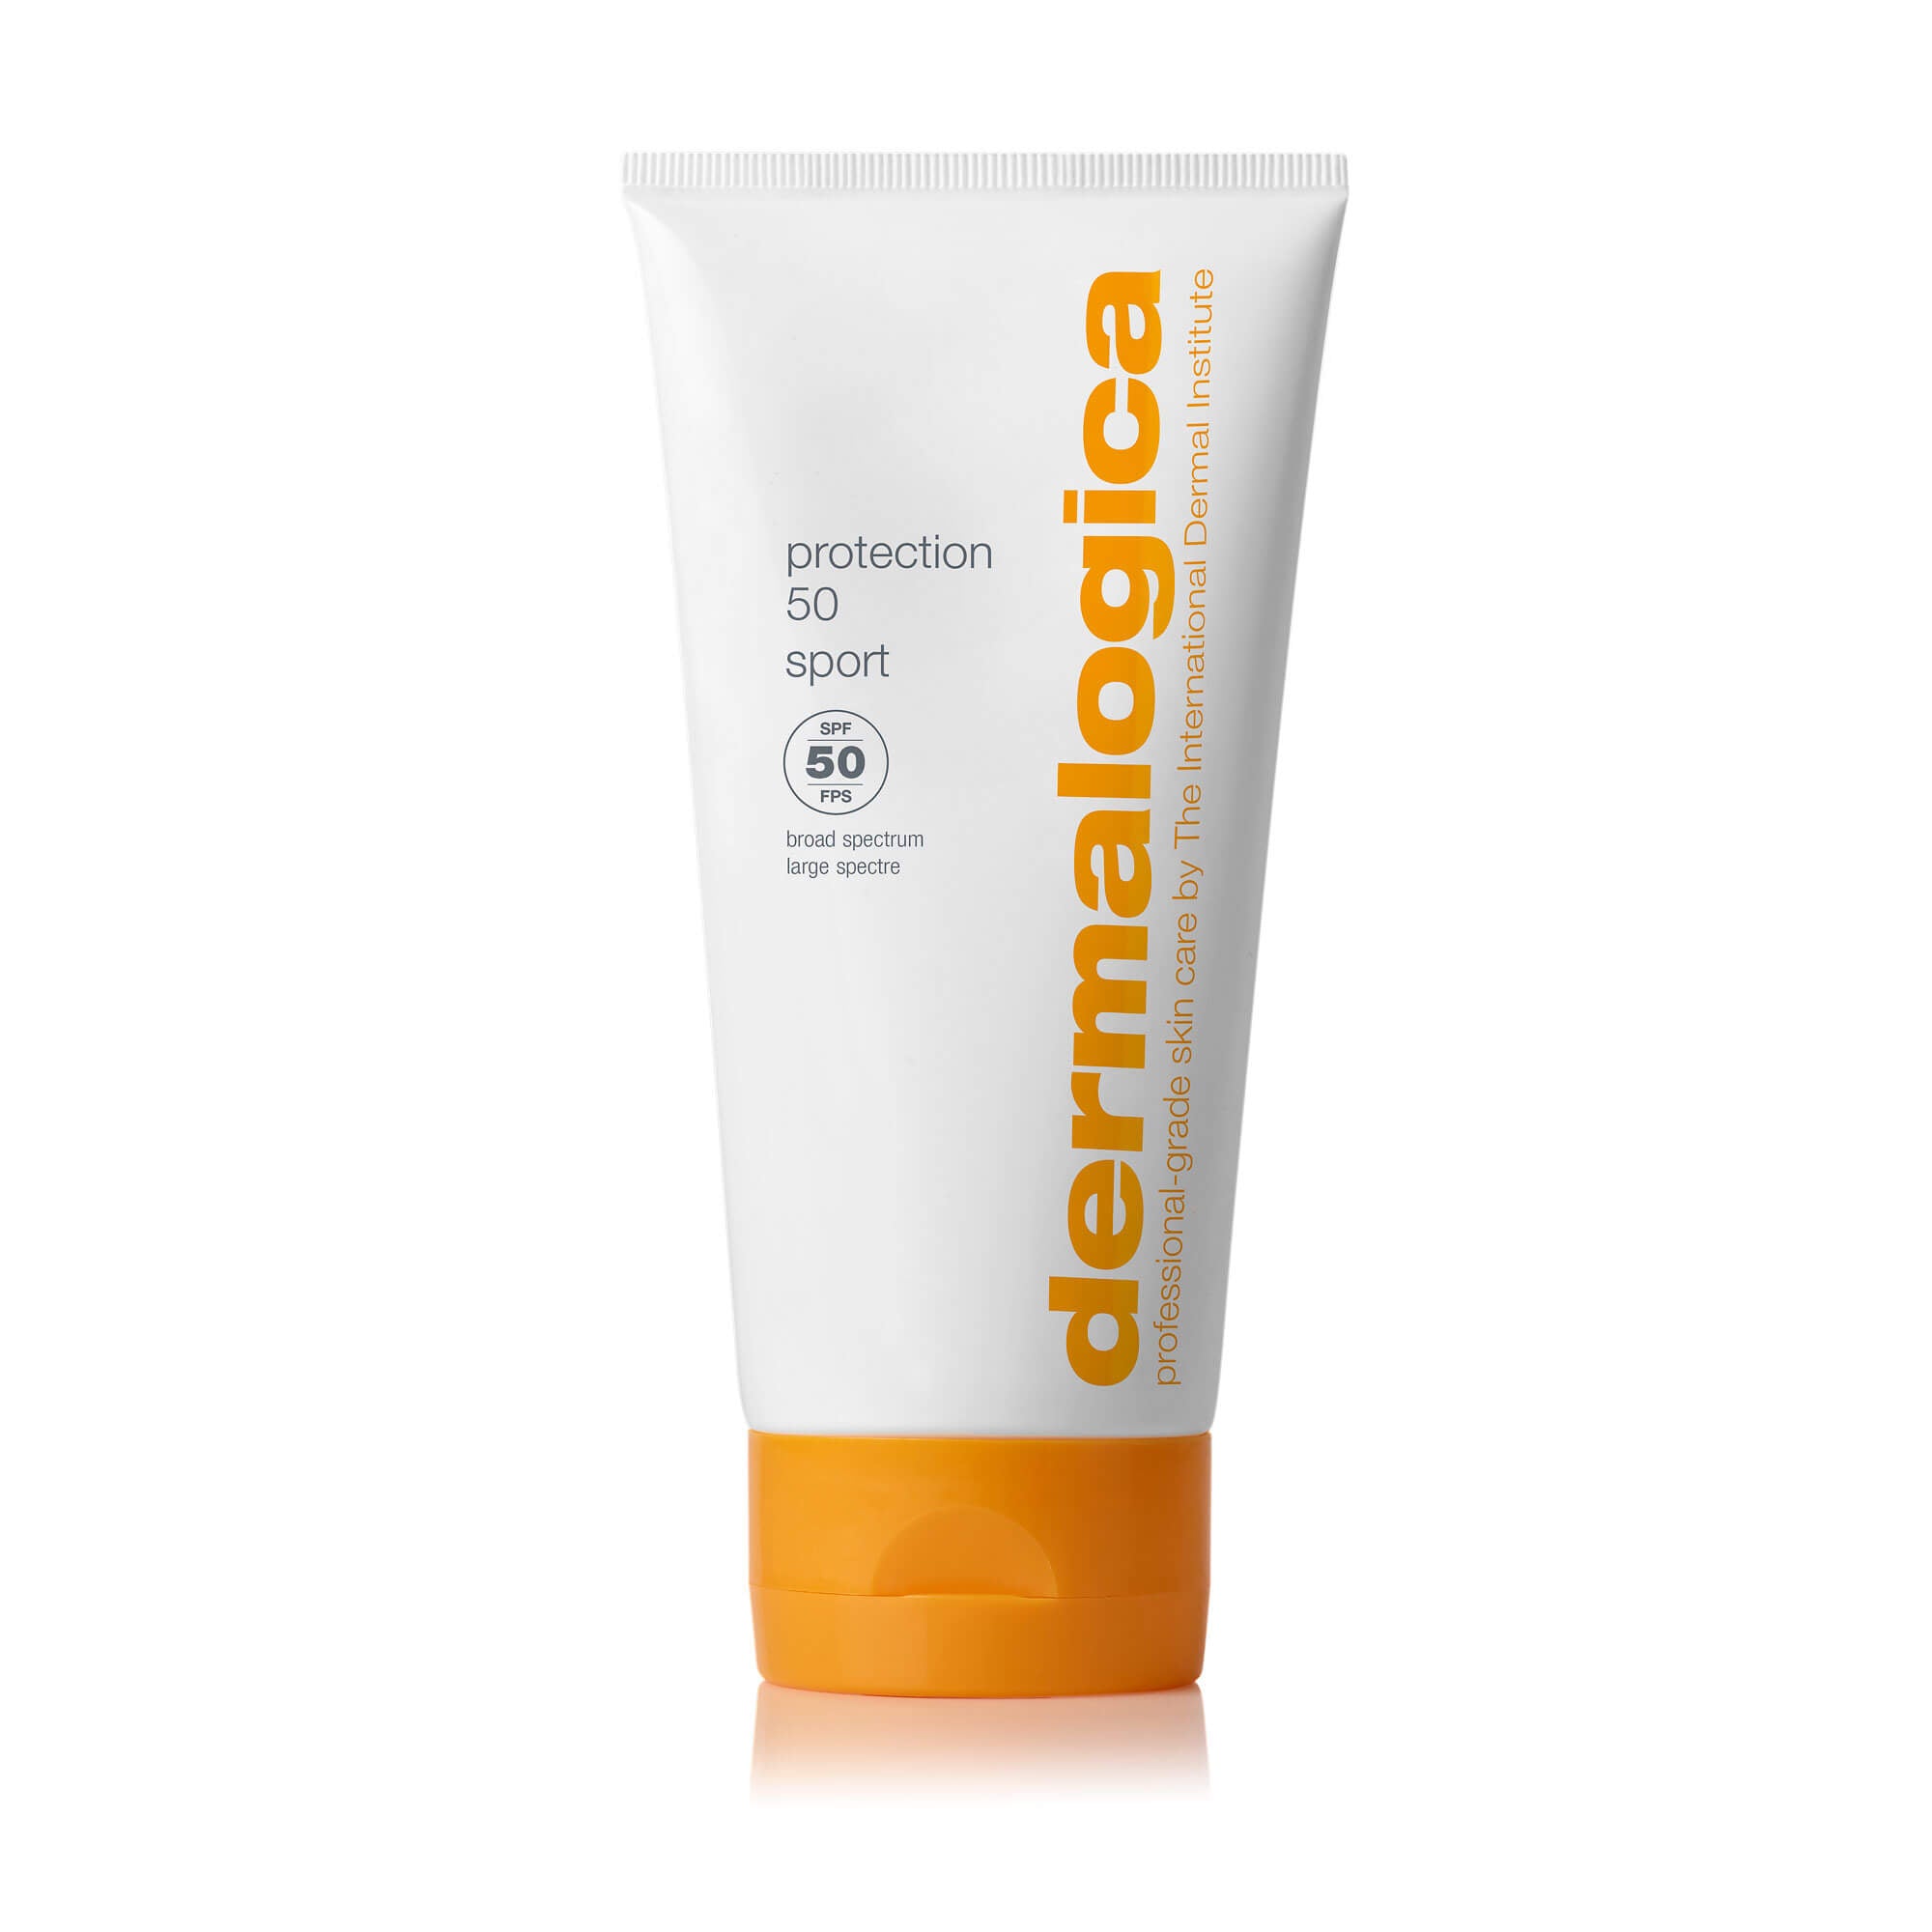 Protection 50 Sport SPF50, Sunscreen | Dermalogica®